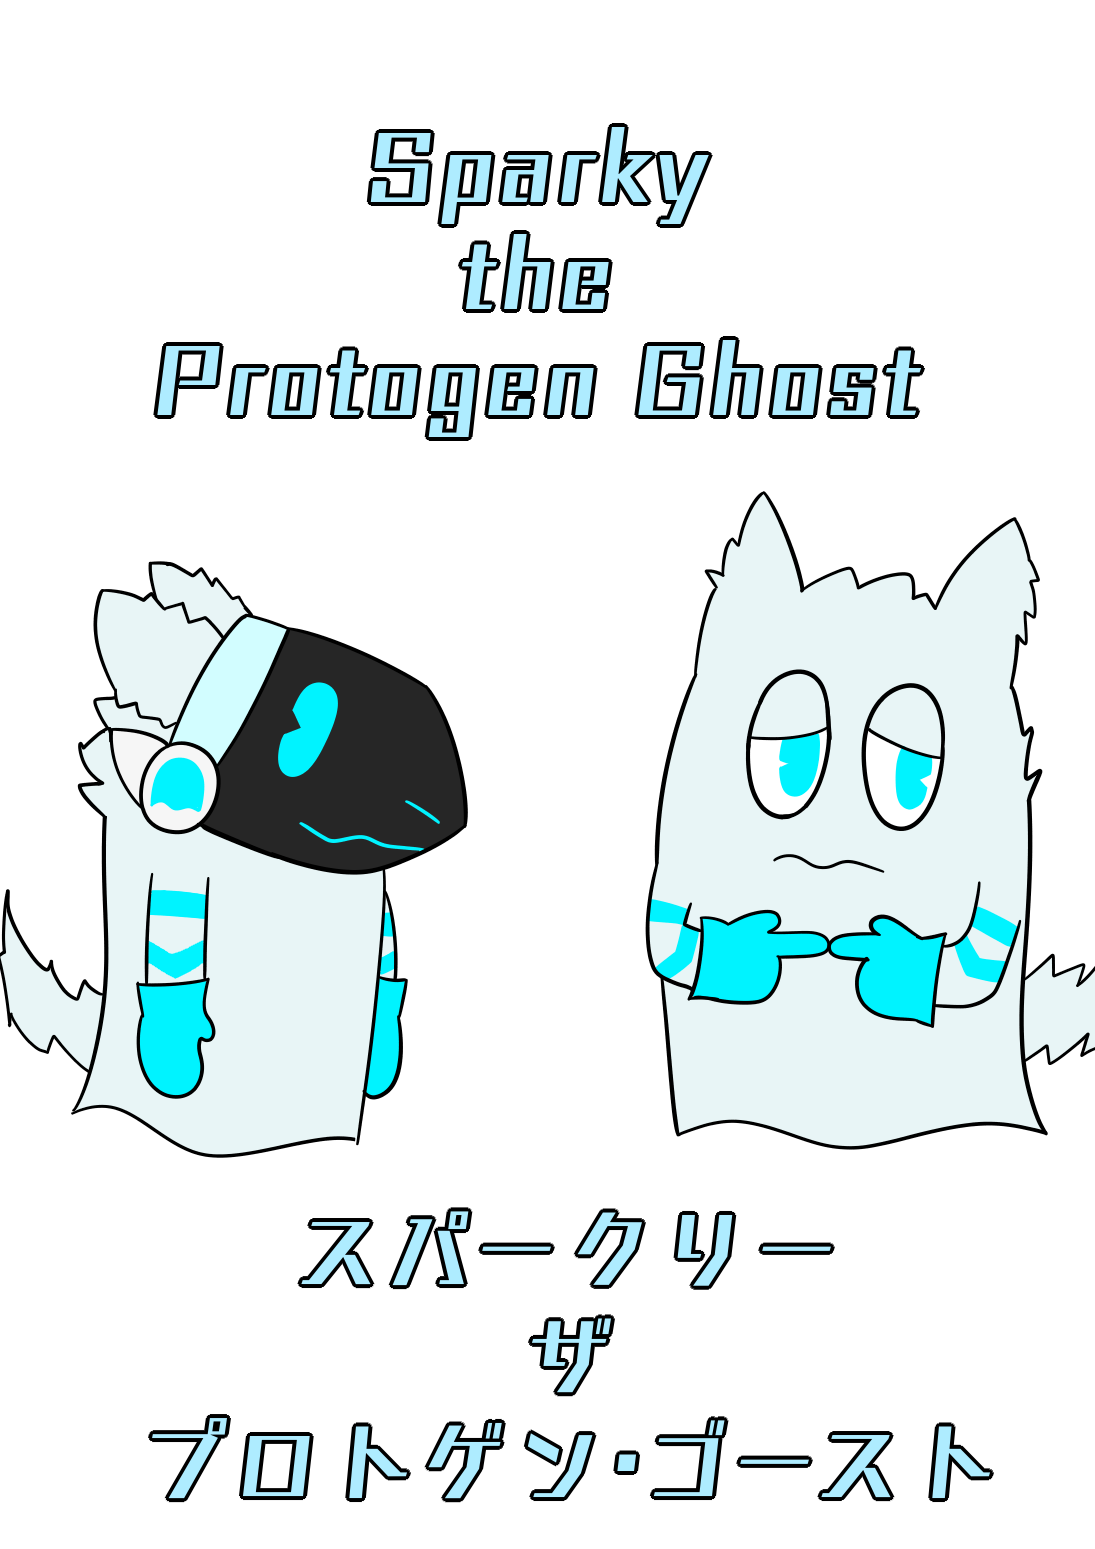 protogen character by Dummystherobloxs on DeviantArt